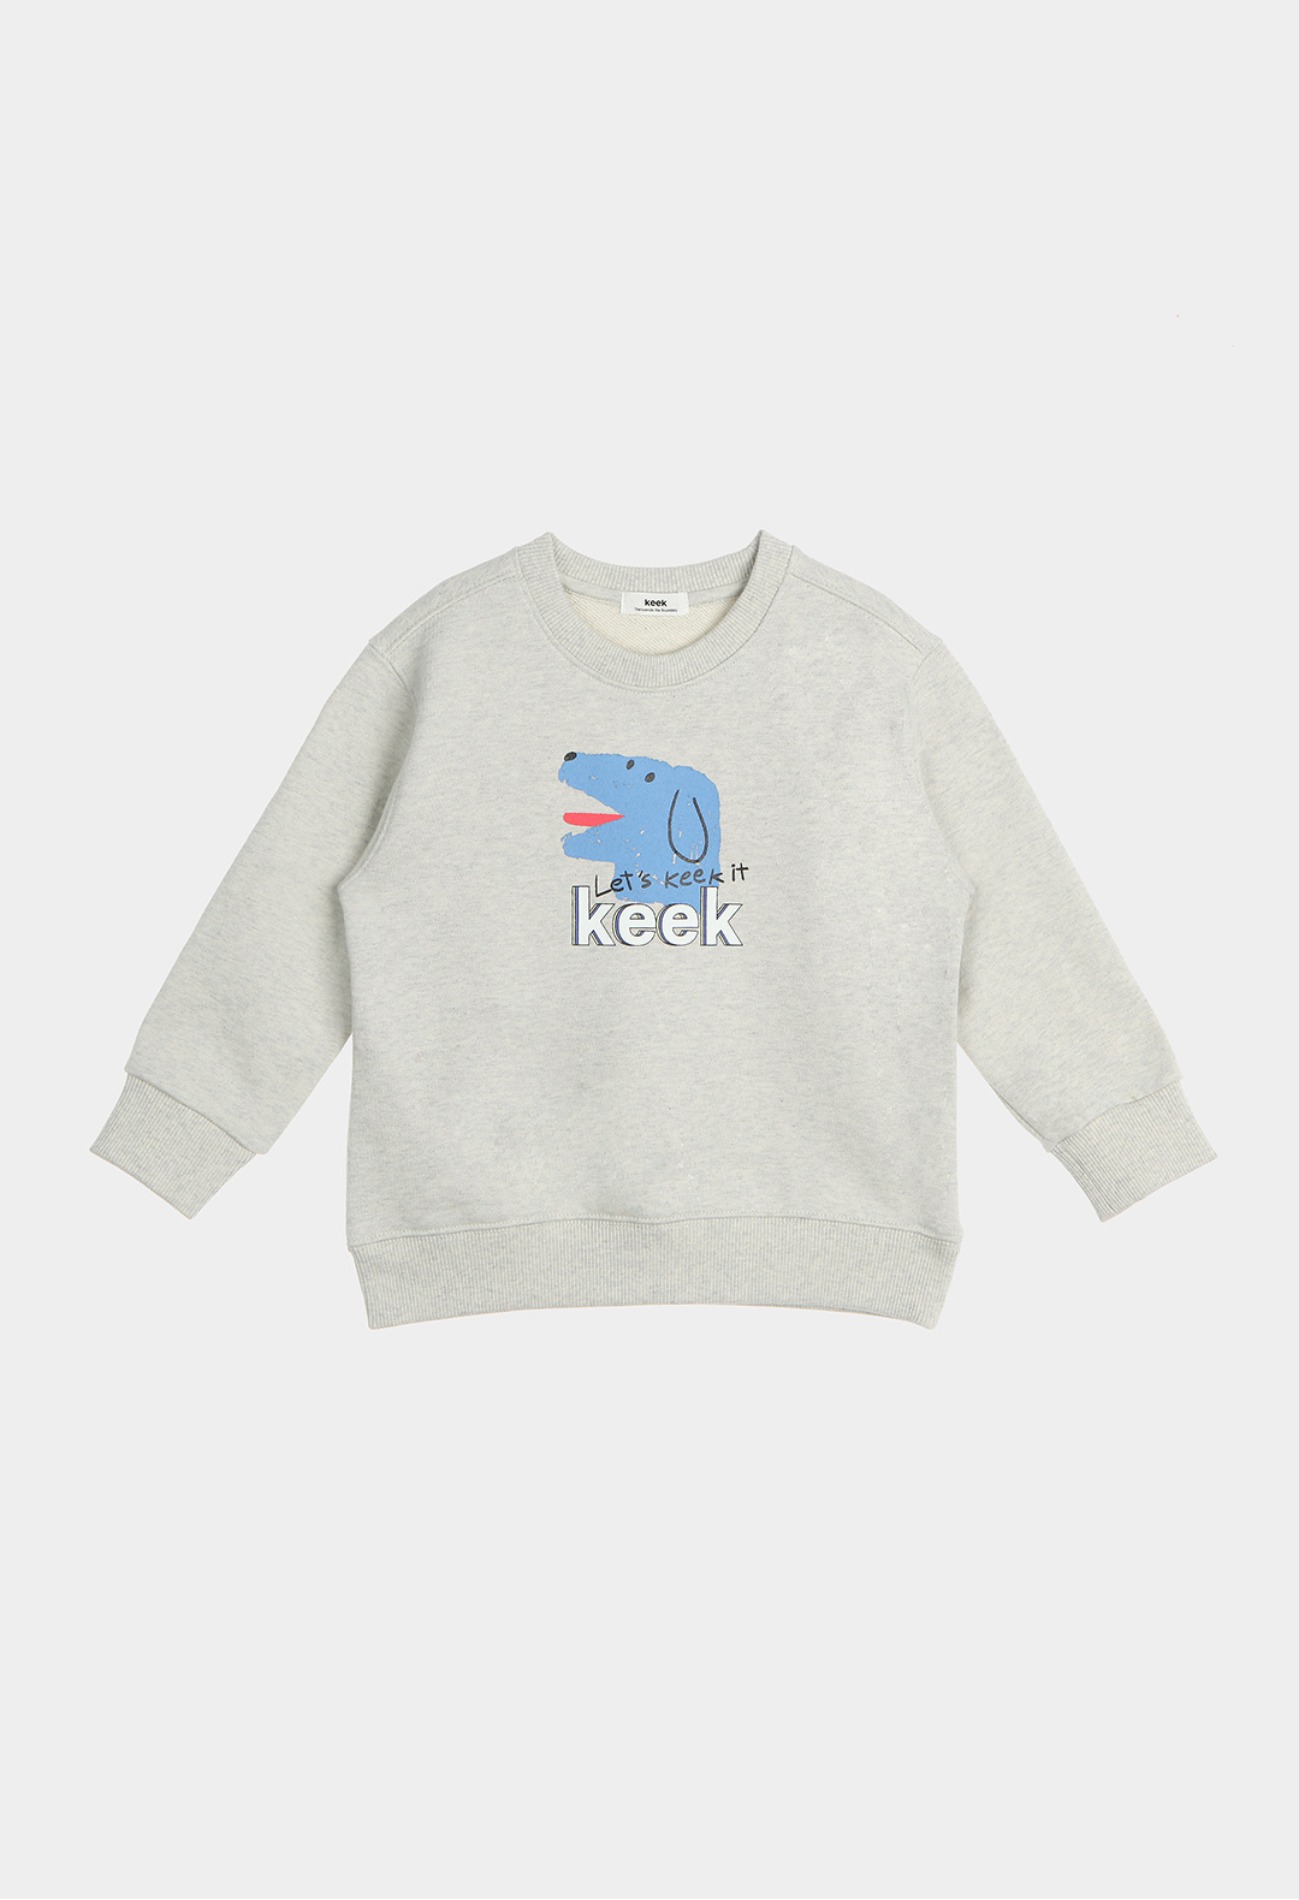 keek [Kids] Doggy Sweatshirts - Oatmeal 스트릿패션 유니섹스브랜드 커플시밀러룩 남자쇼핑몰 여성의류쇼핑몰 후드티 힙색